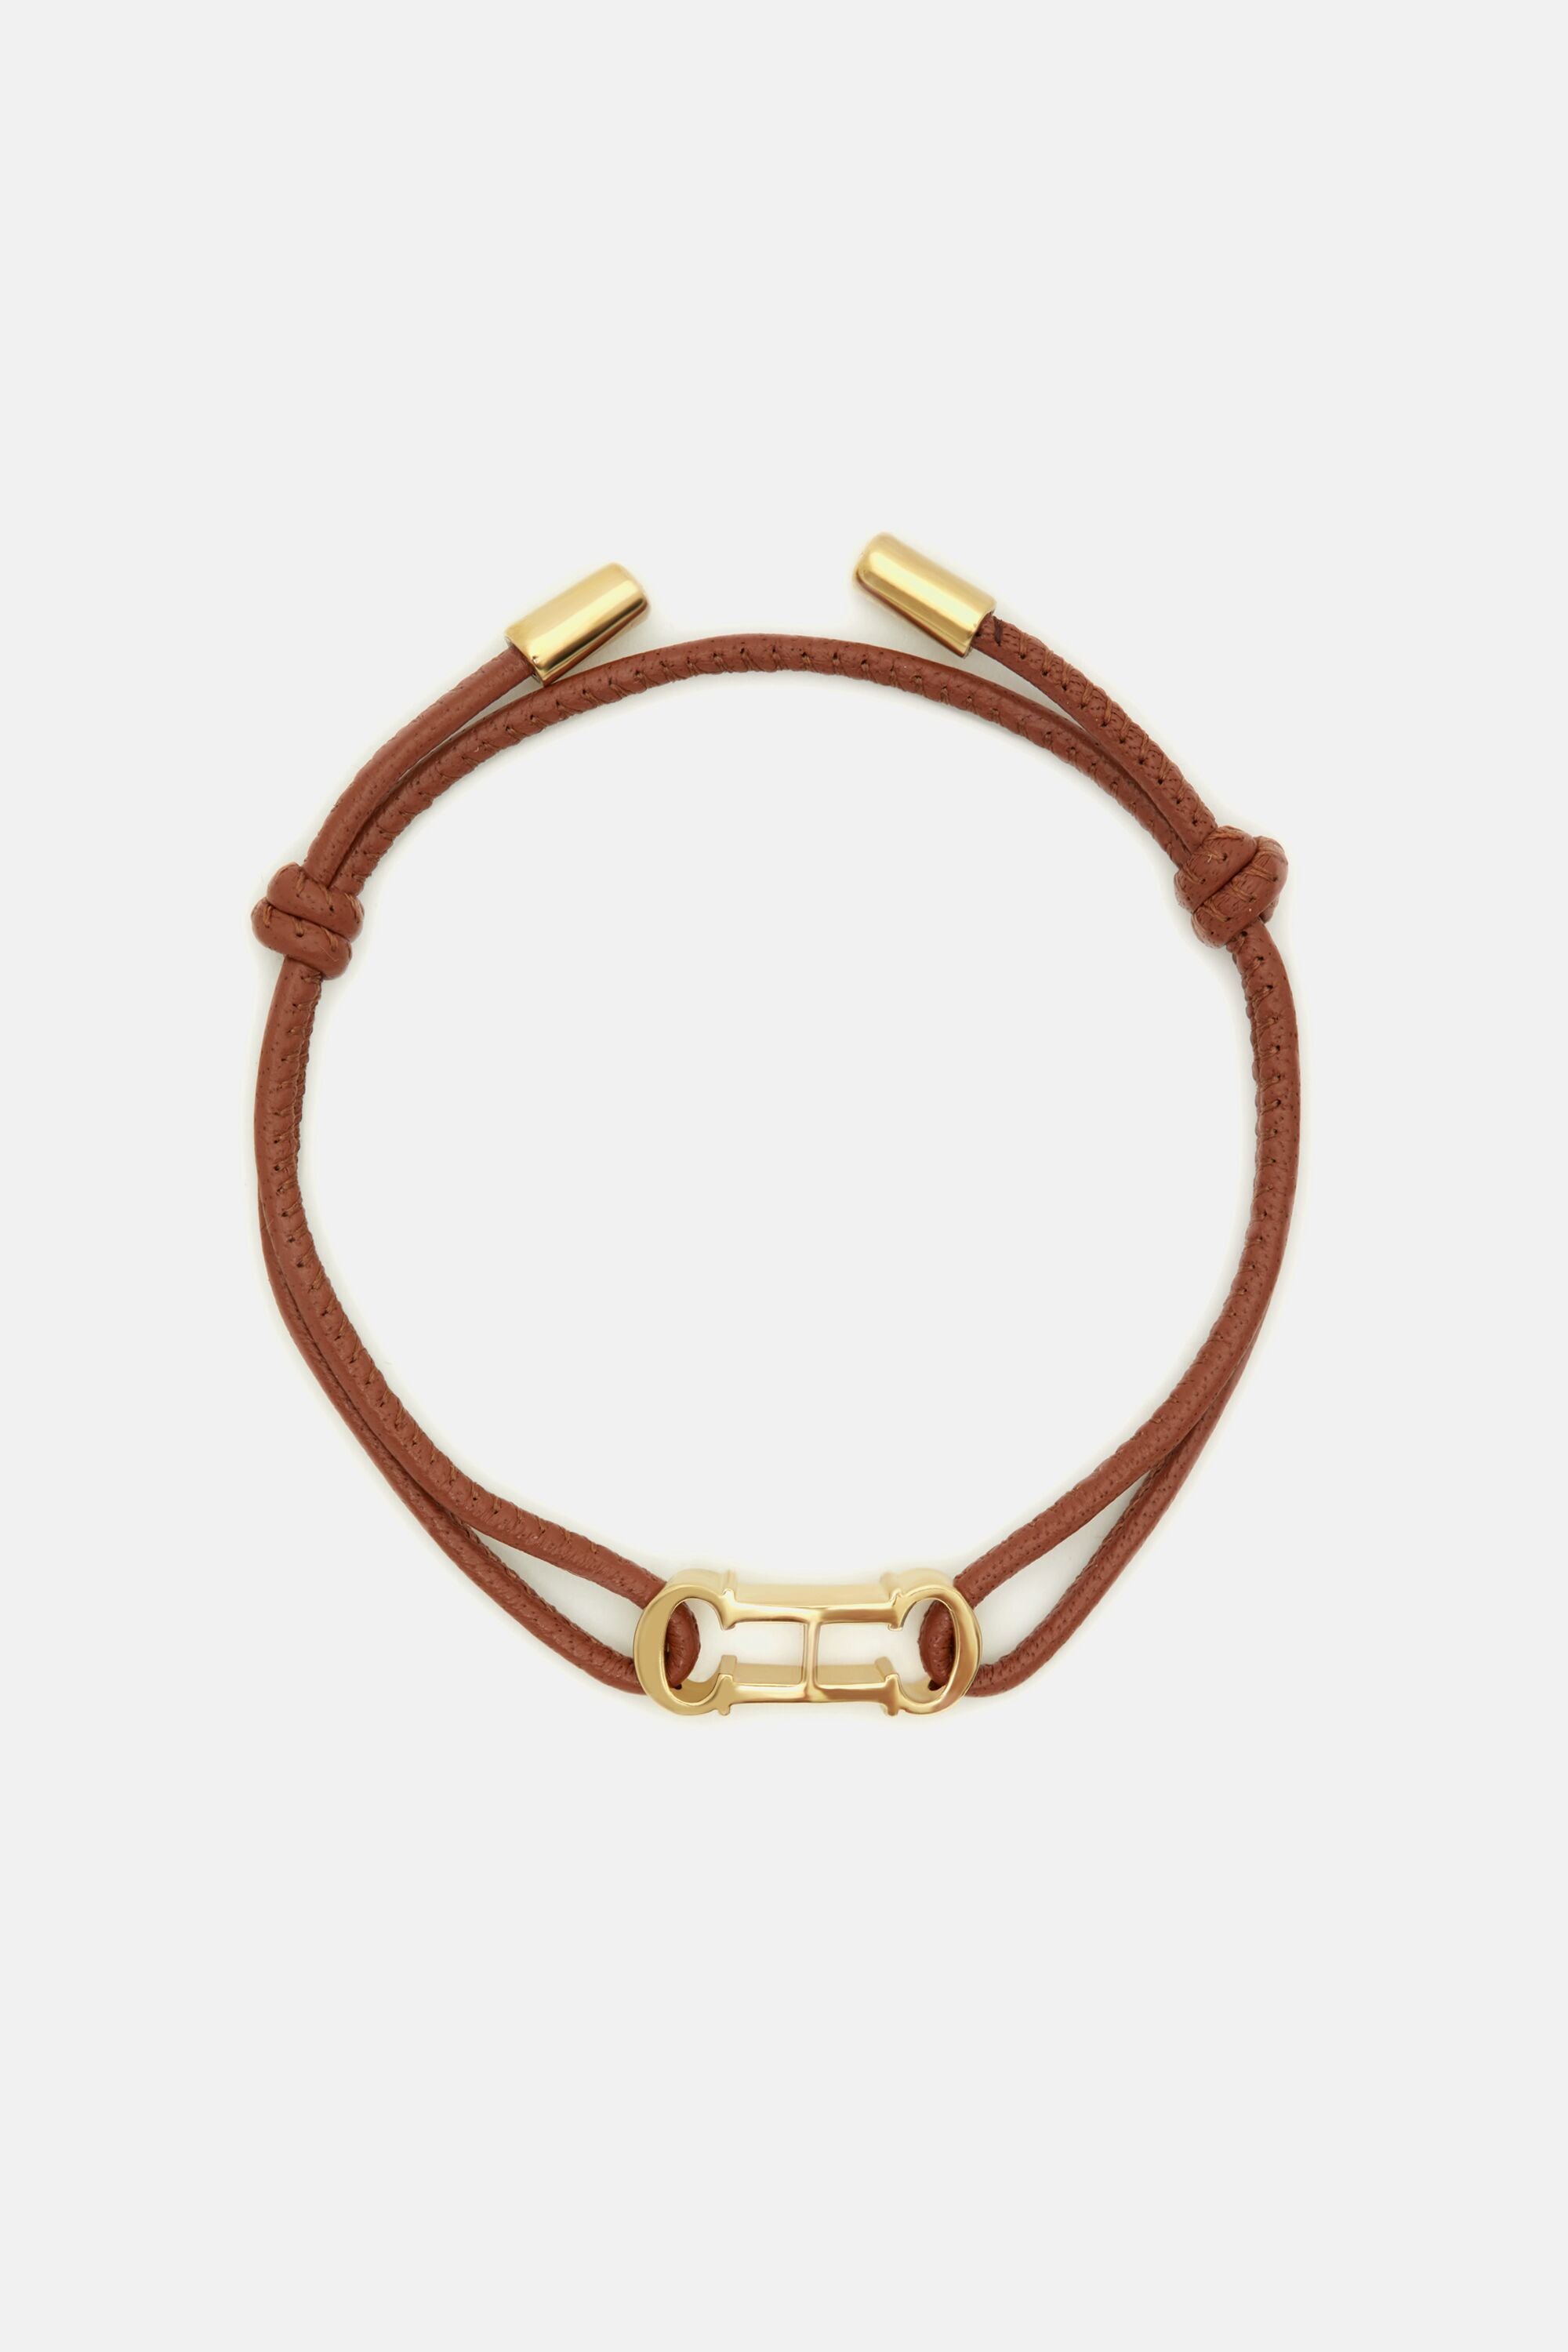 CAROLINA HERRERA VINTAGE Matte Gold Link Toggle Bracelet With Gold and  White Polka Dot Charm - Etsy